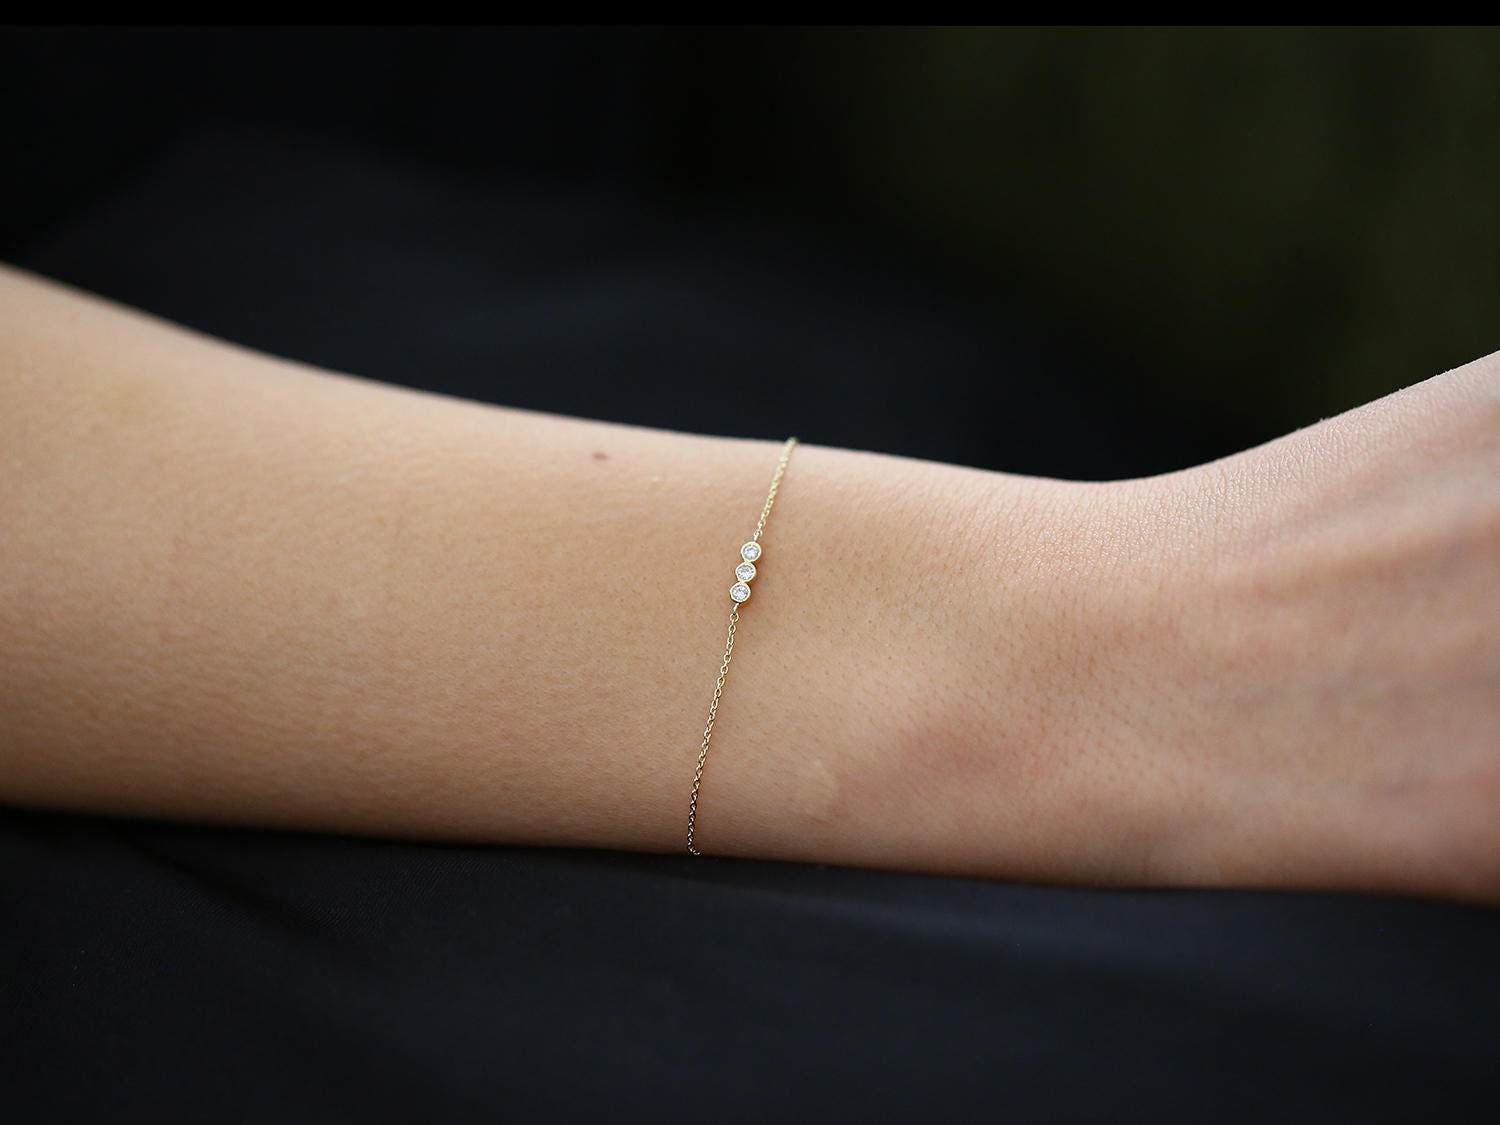 Diamond Bracelet with Thin Chain/Trio Diamond Bracelet in 14k Solid Gold in bezel setting/ Diamond Bezel Bracelet/ Dainty Diamond Bracelet